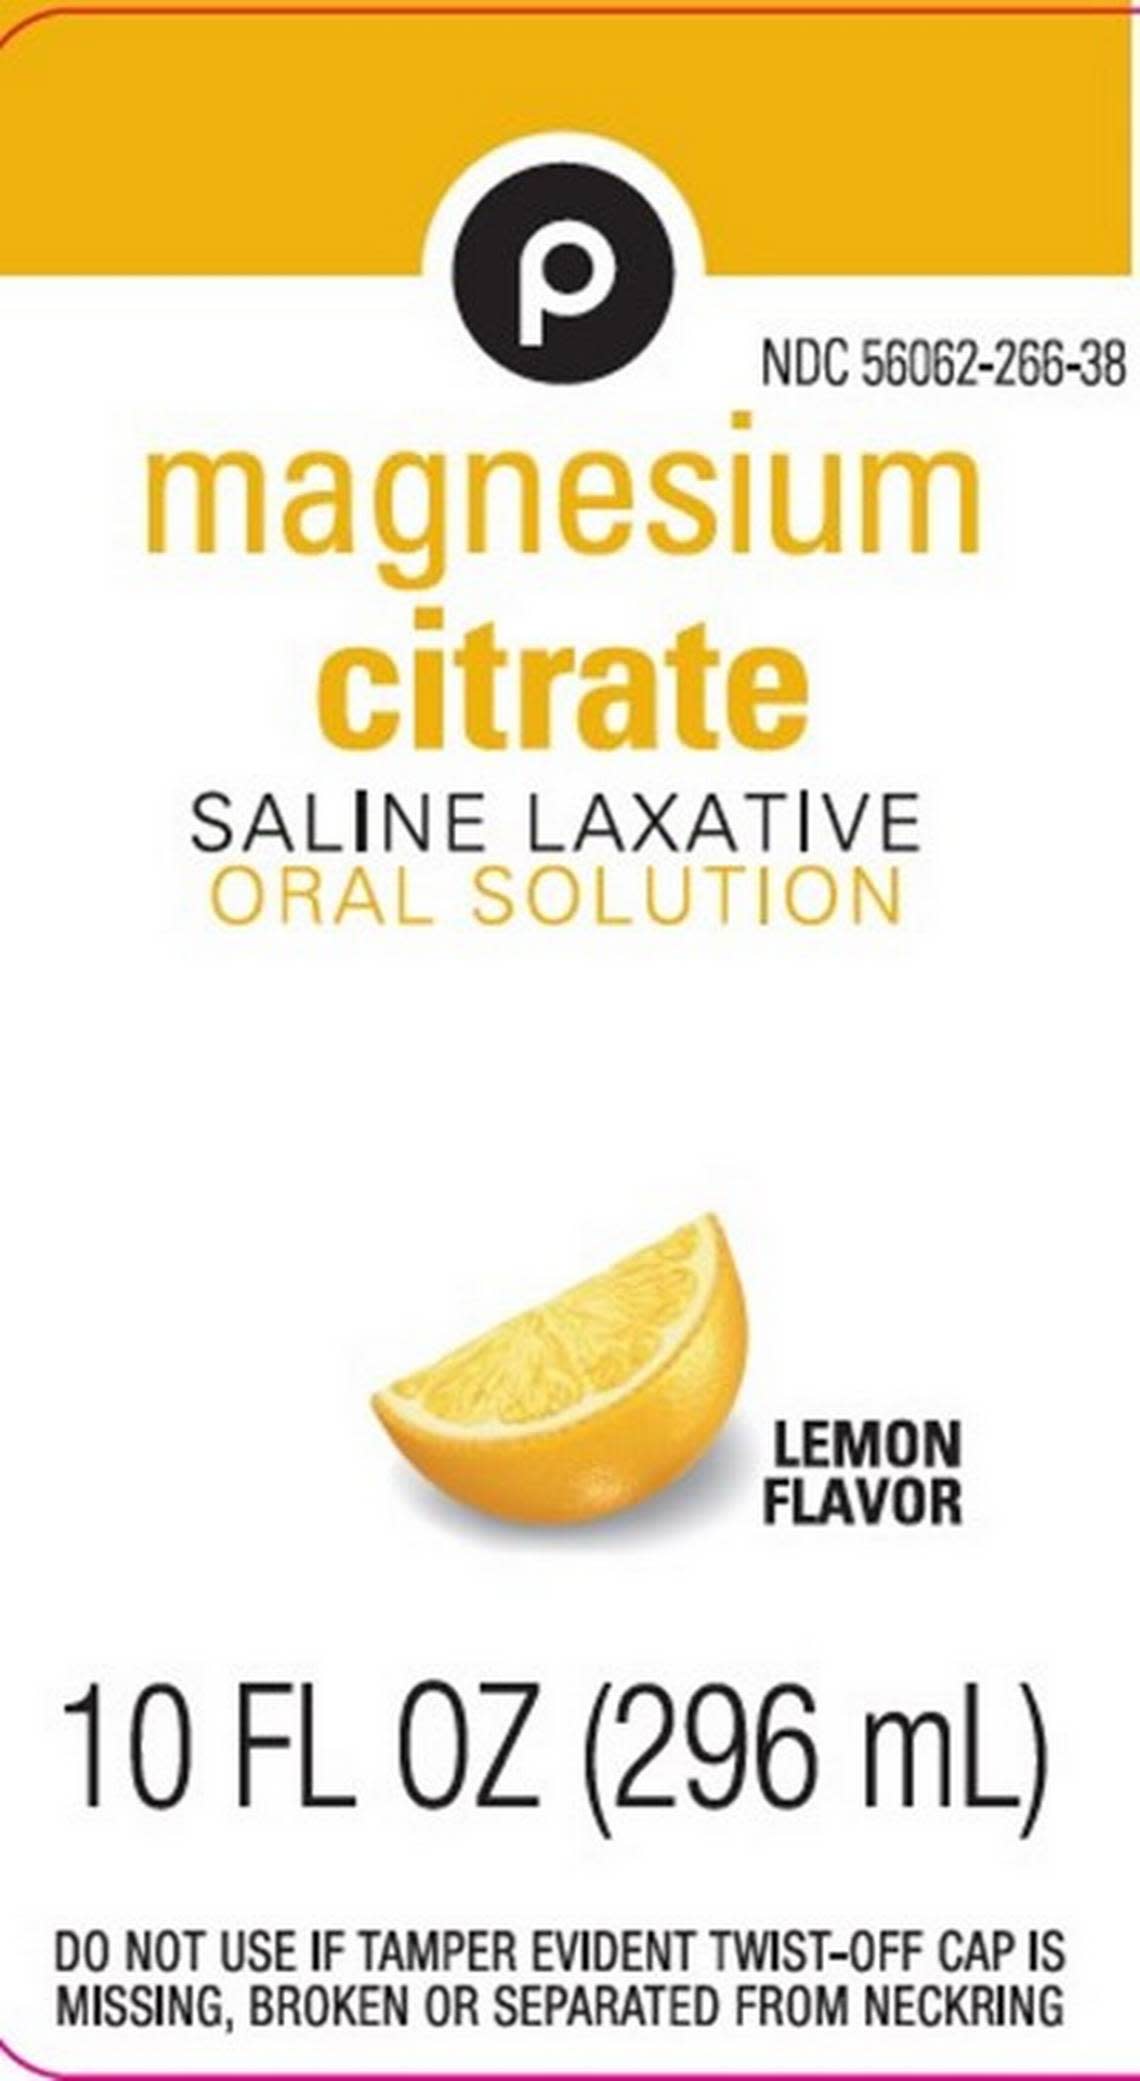 Publix brand Magnesium Citrate laxative